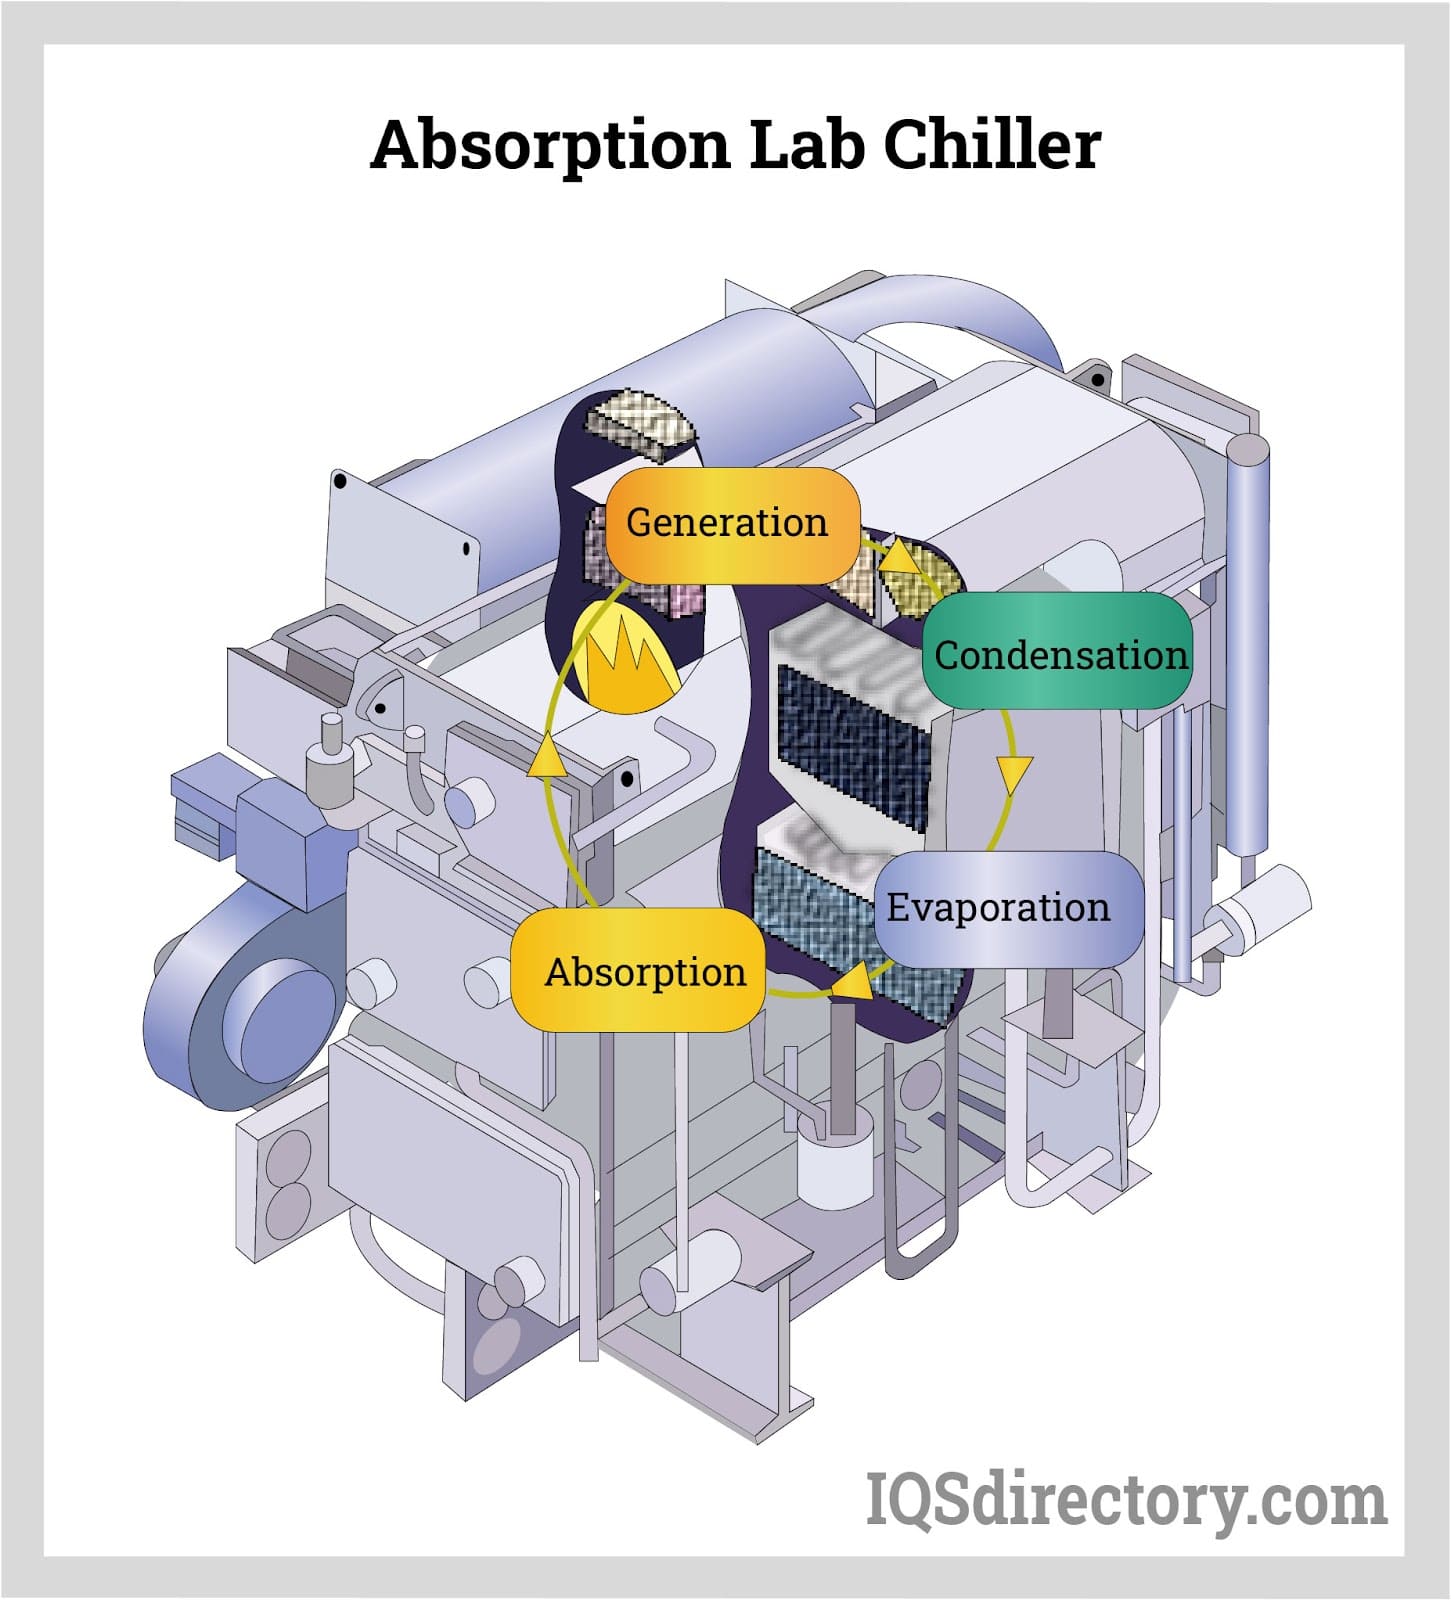 Absorption Lab Chiller